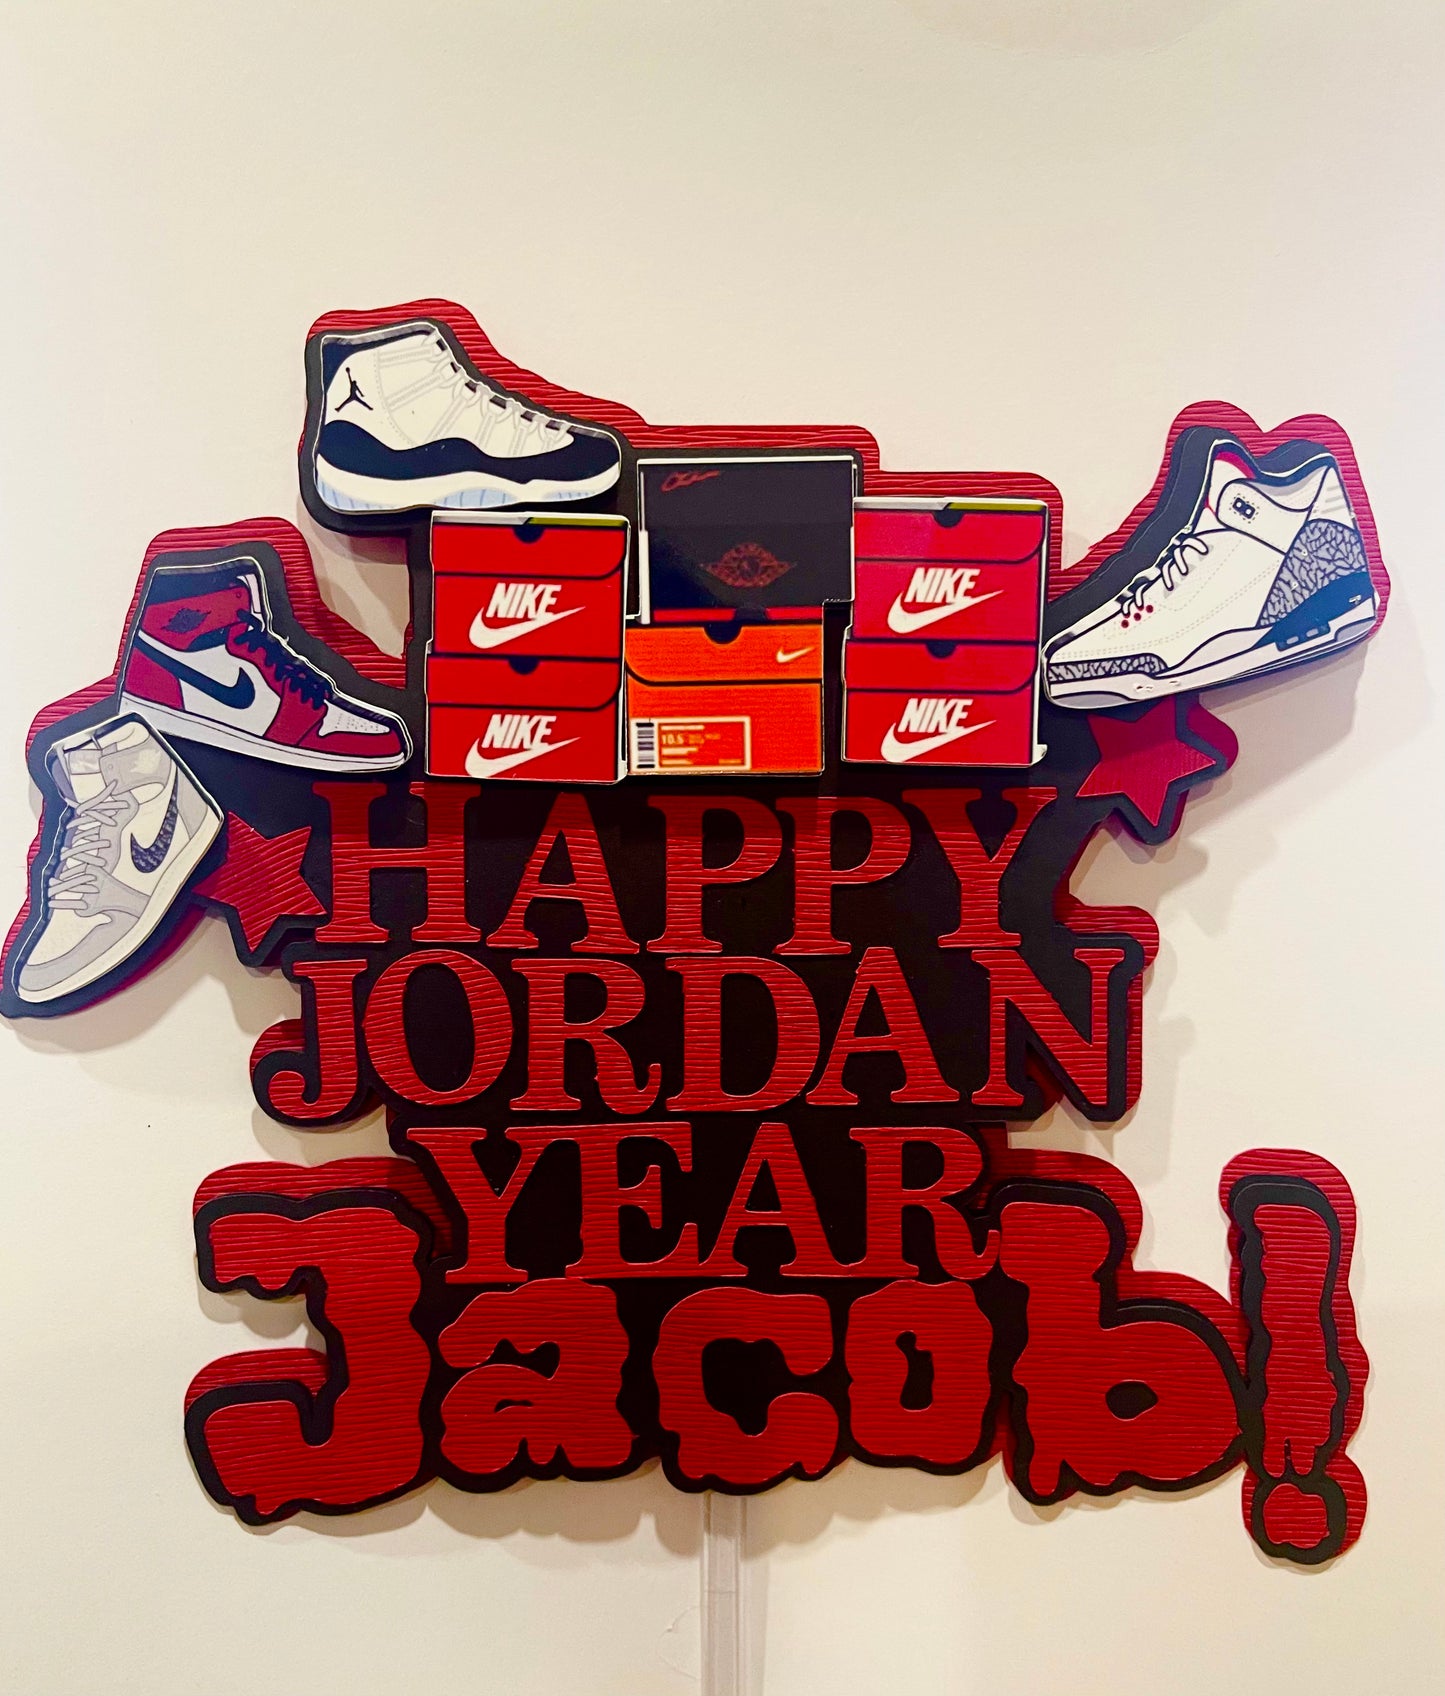 Personalized Happy Jordan Year Cake topper